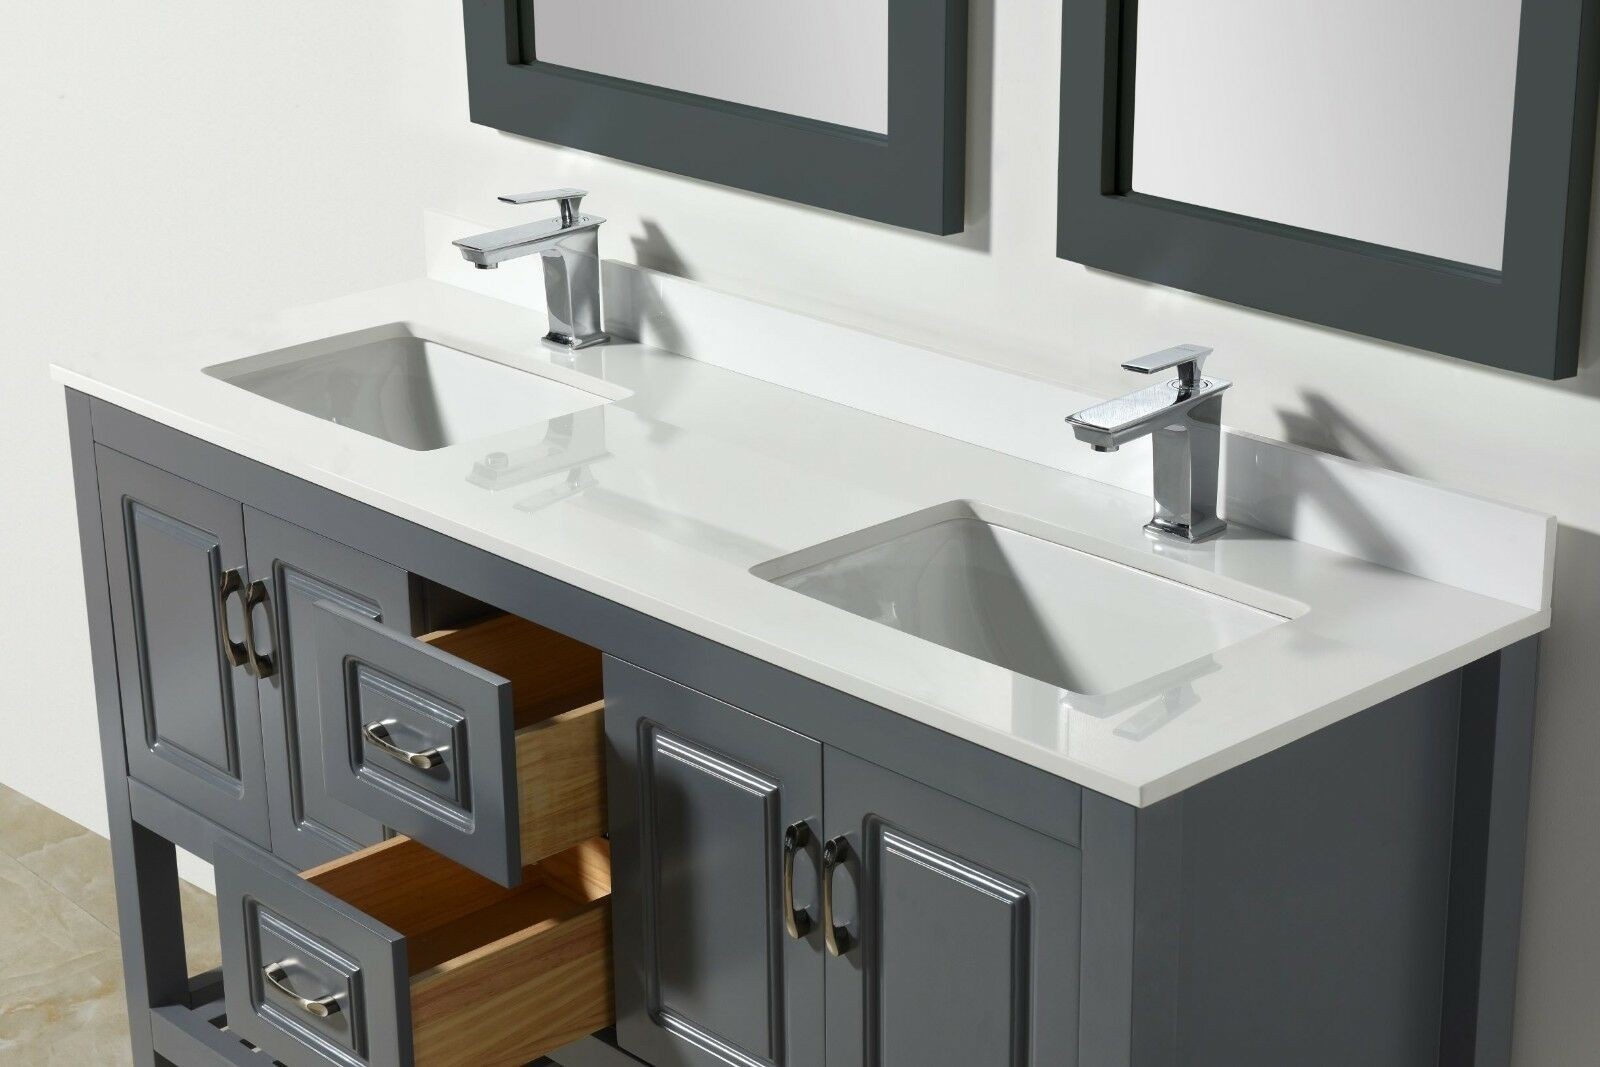 Moreno bath 60 bathroom vanity free standing double sink